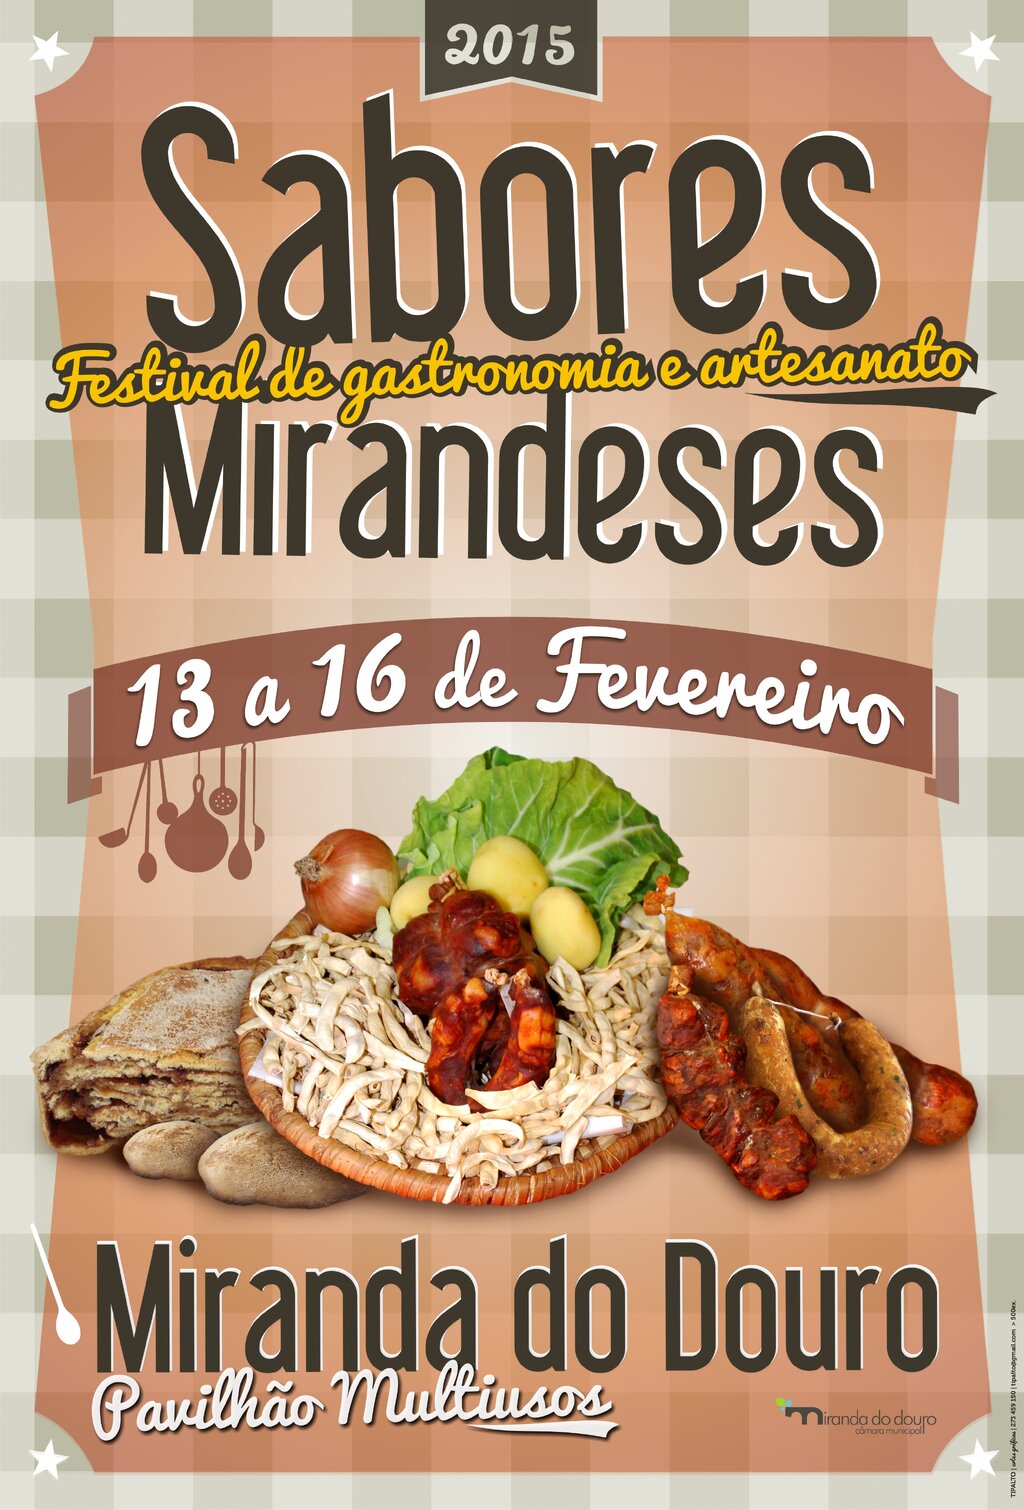 Festival de Sabores Mirandeses